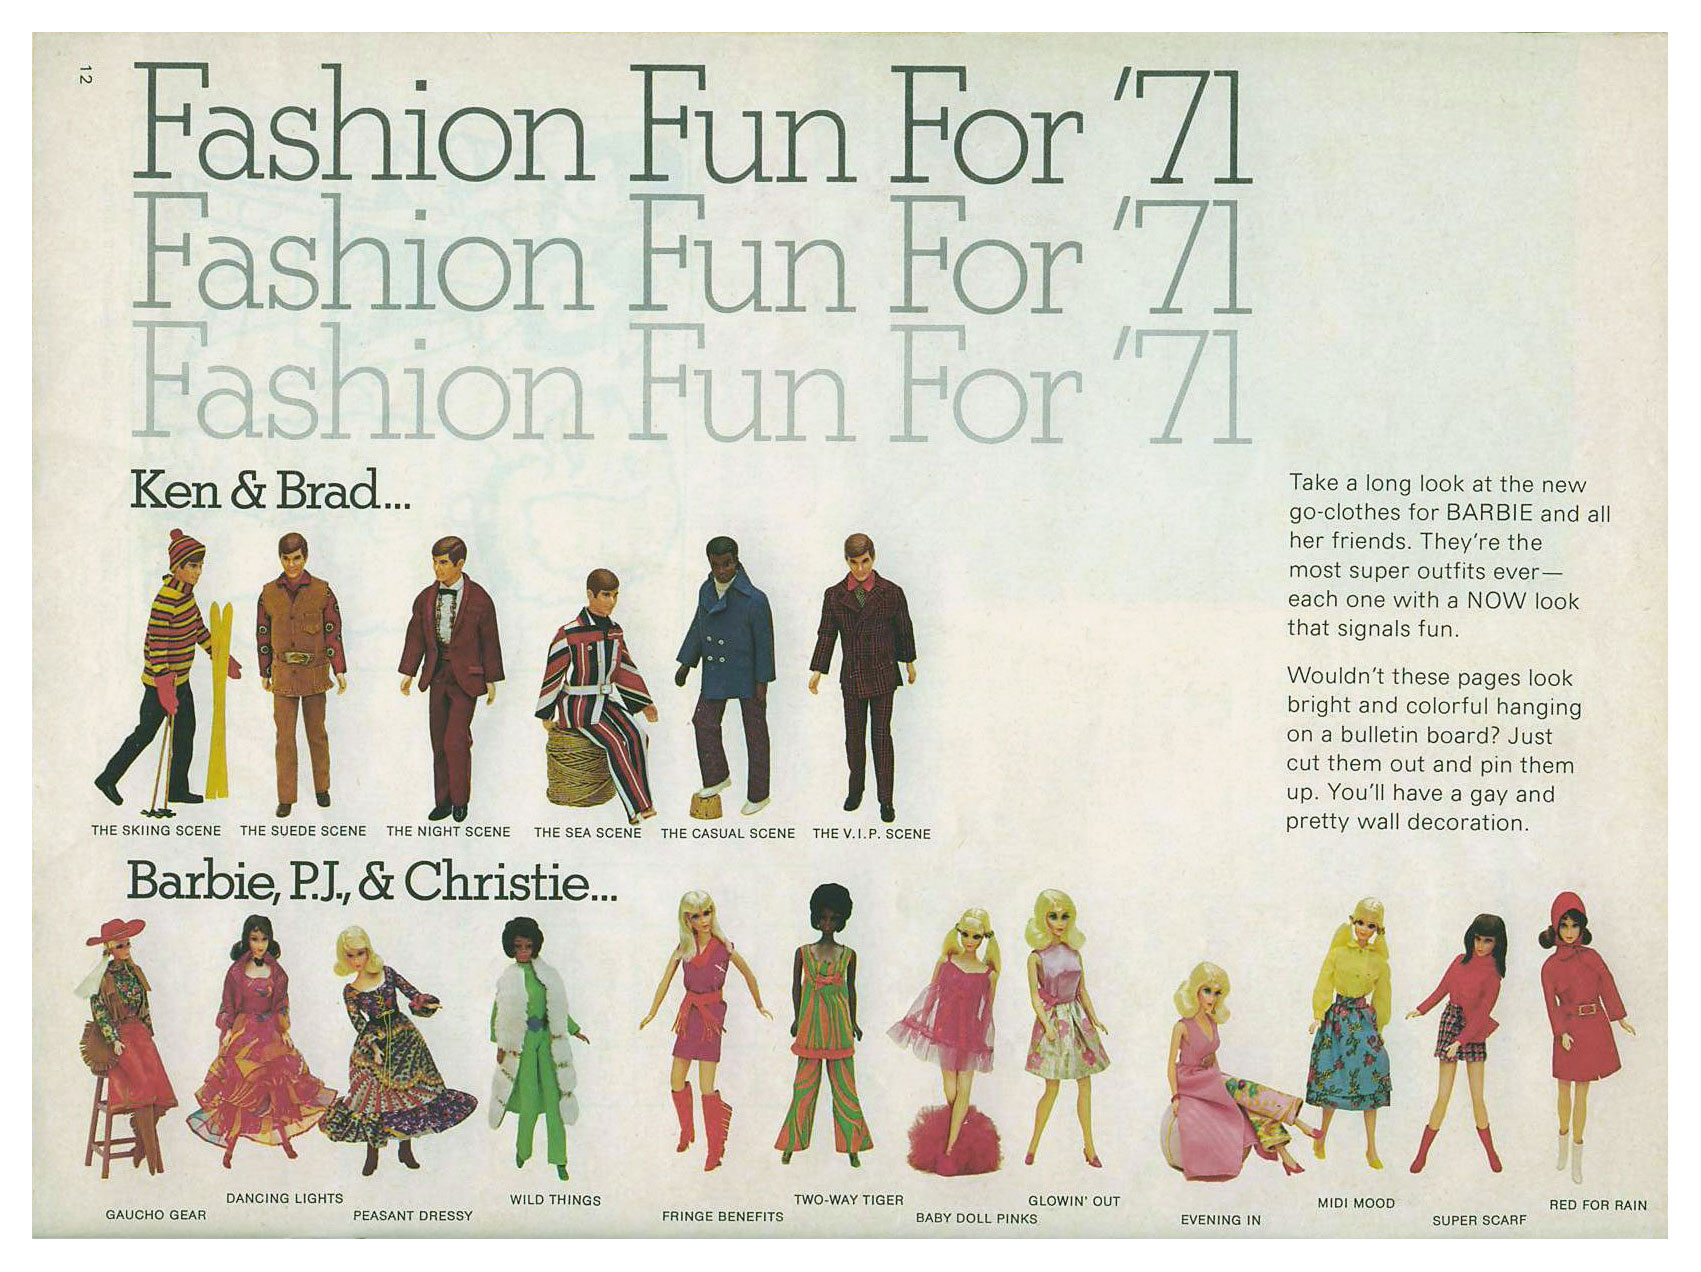 From 1971 Barbie Talk magazine